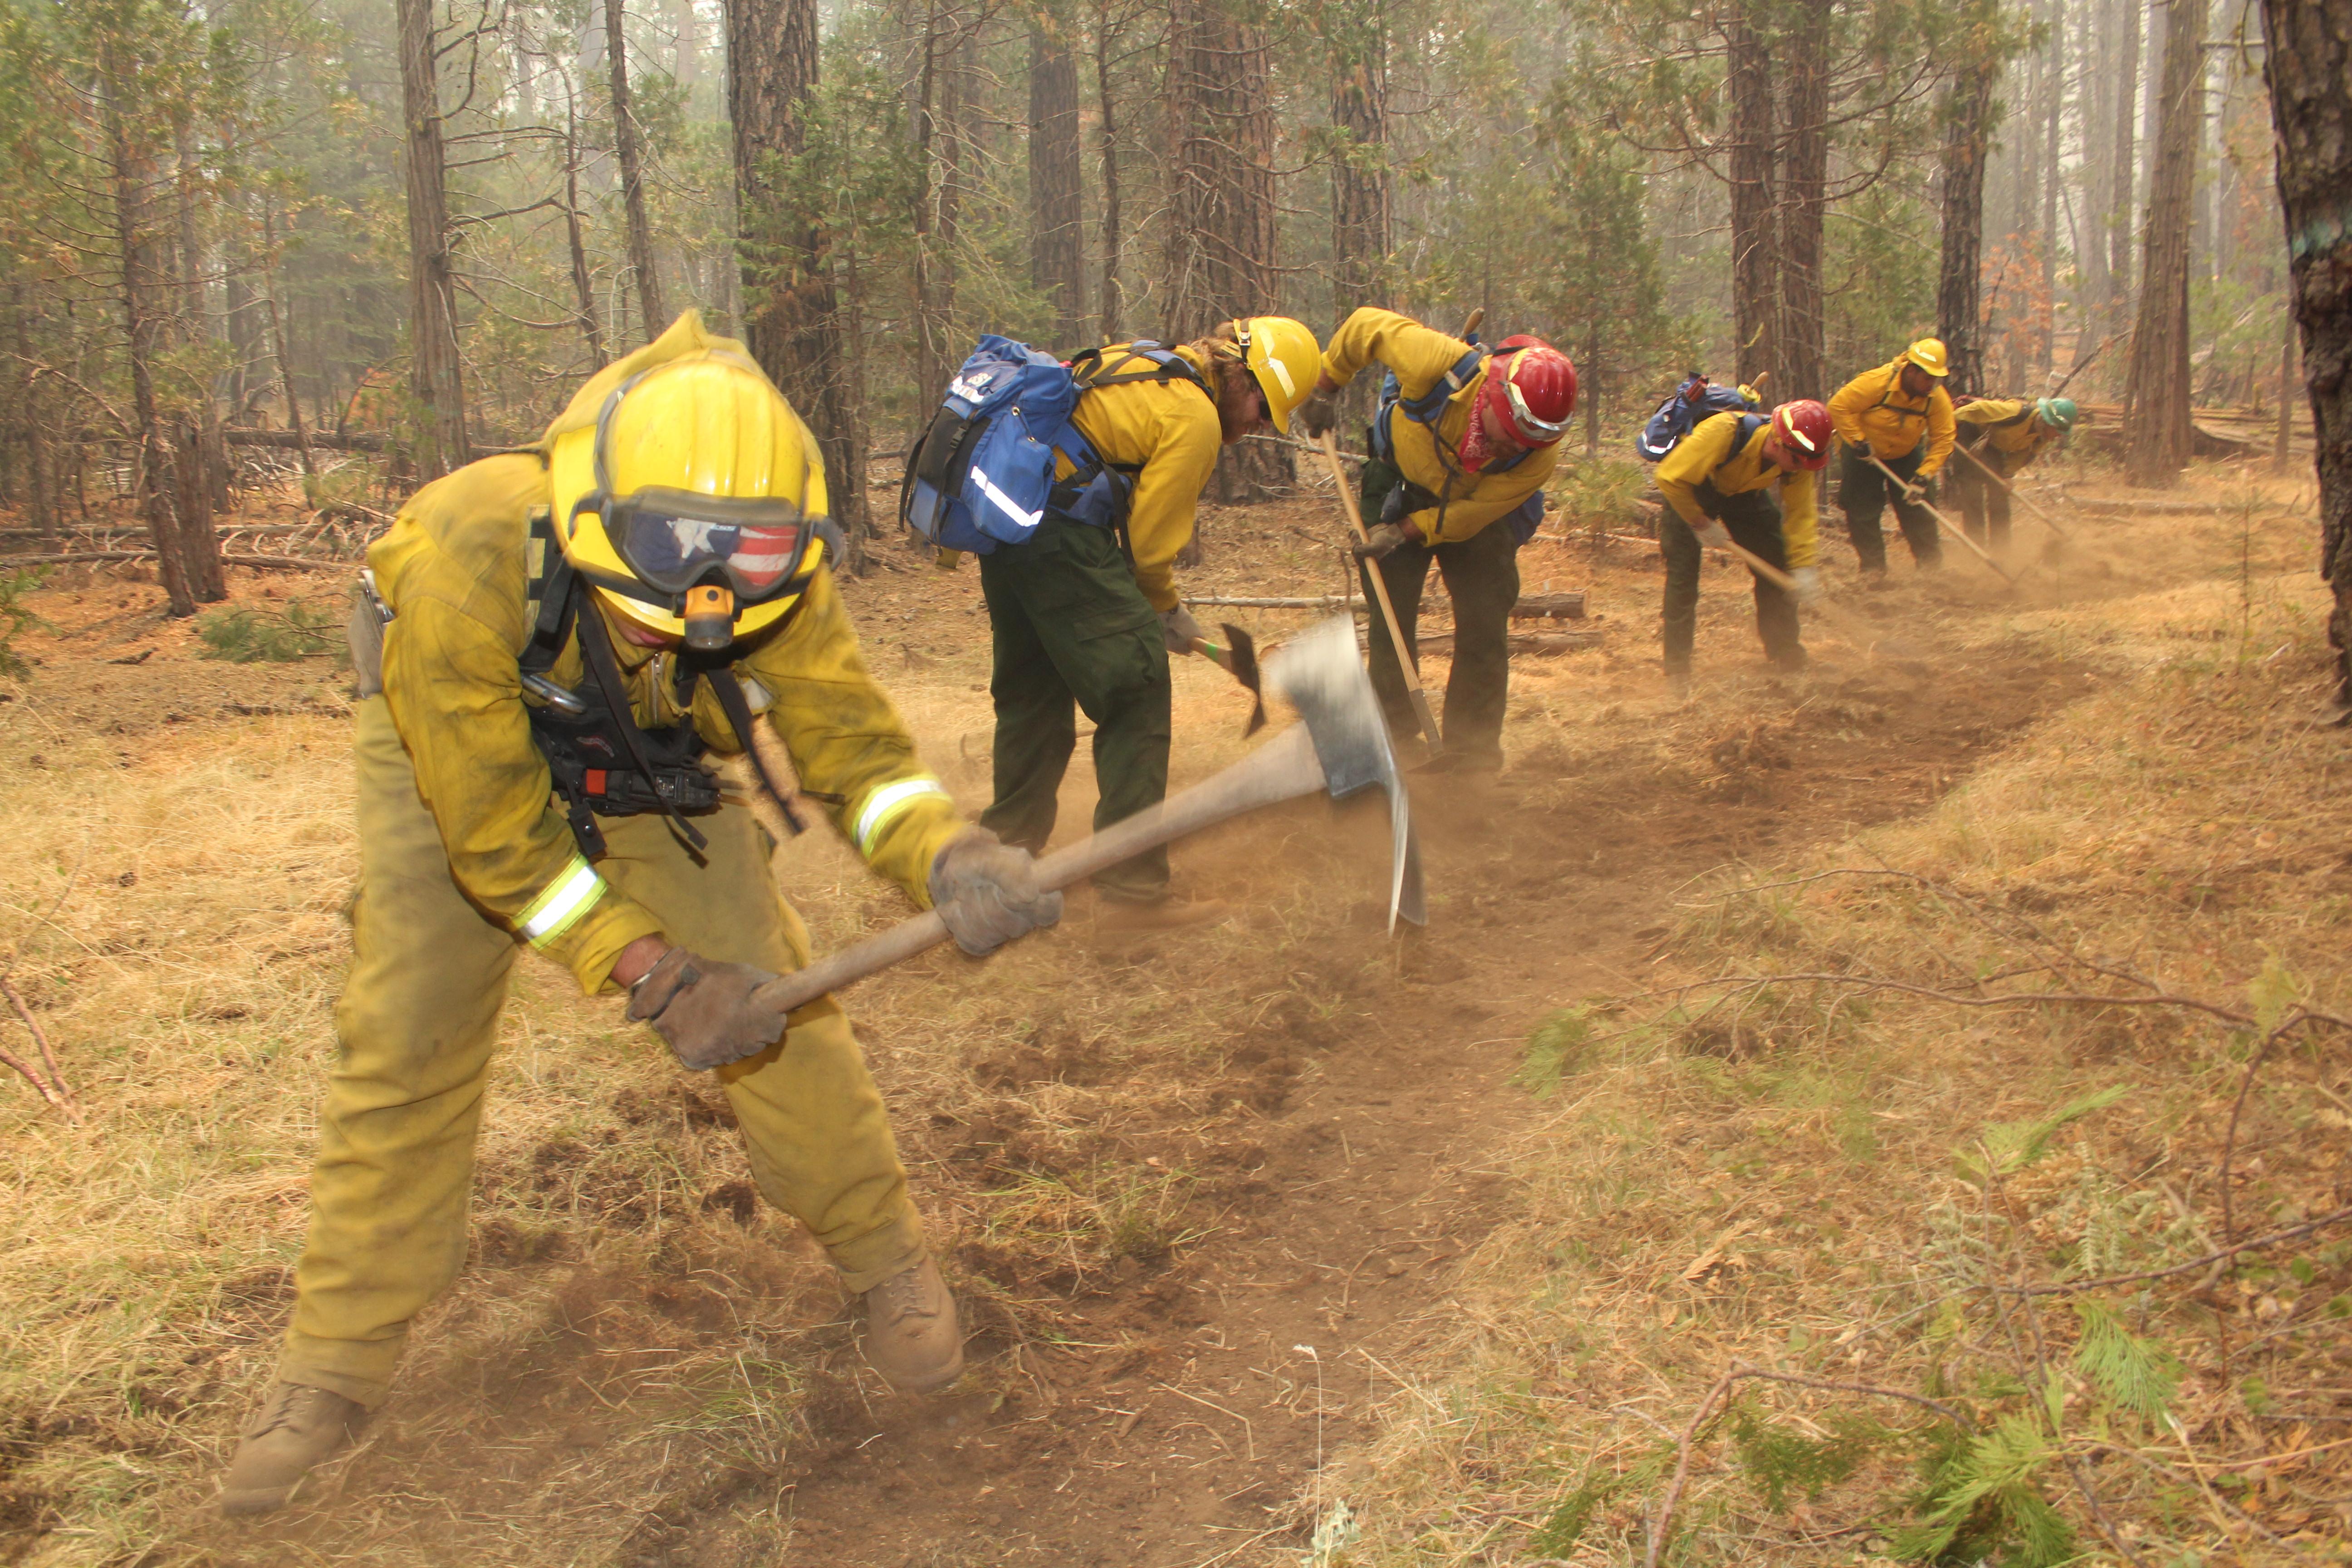 File:Fire Crews construct fireline on the Rim Fire (9623960852